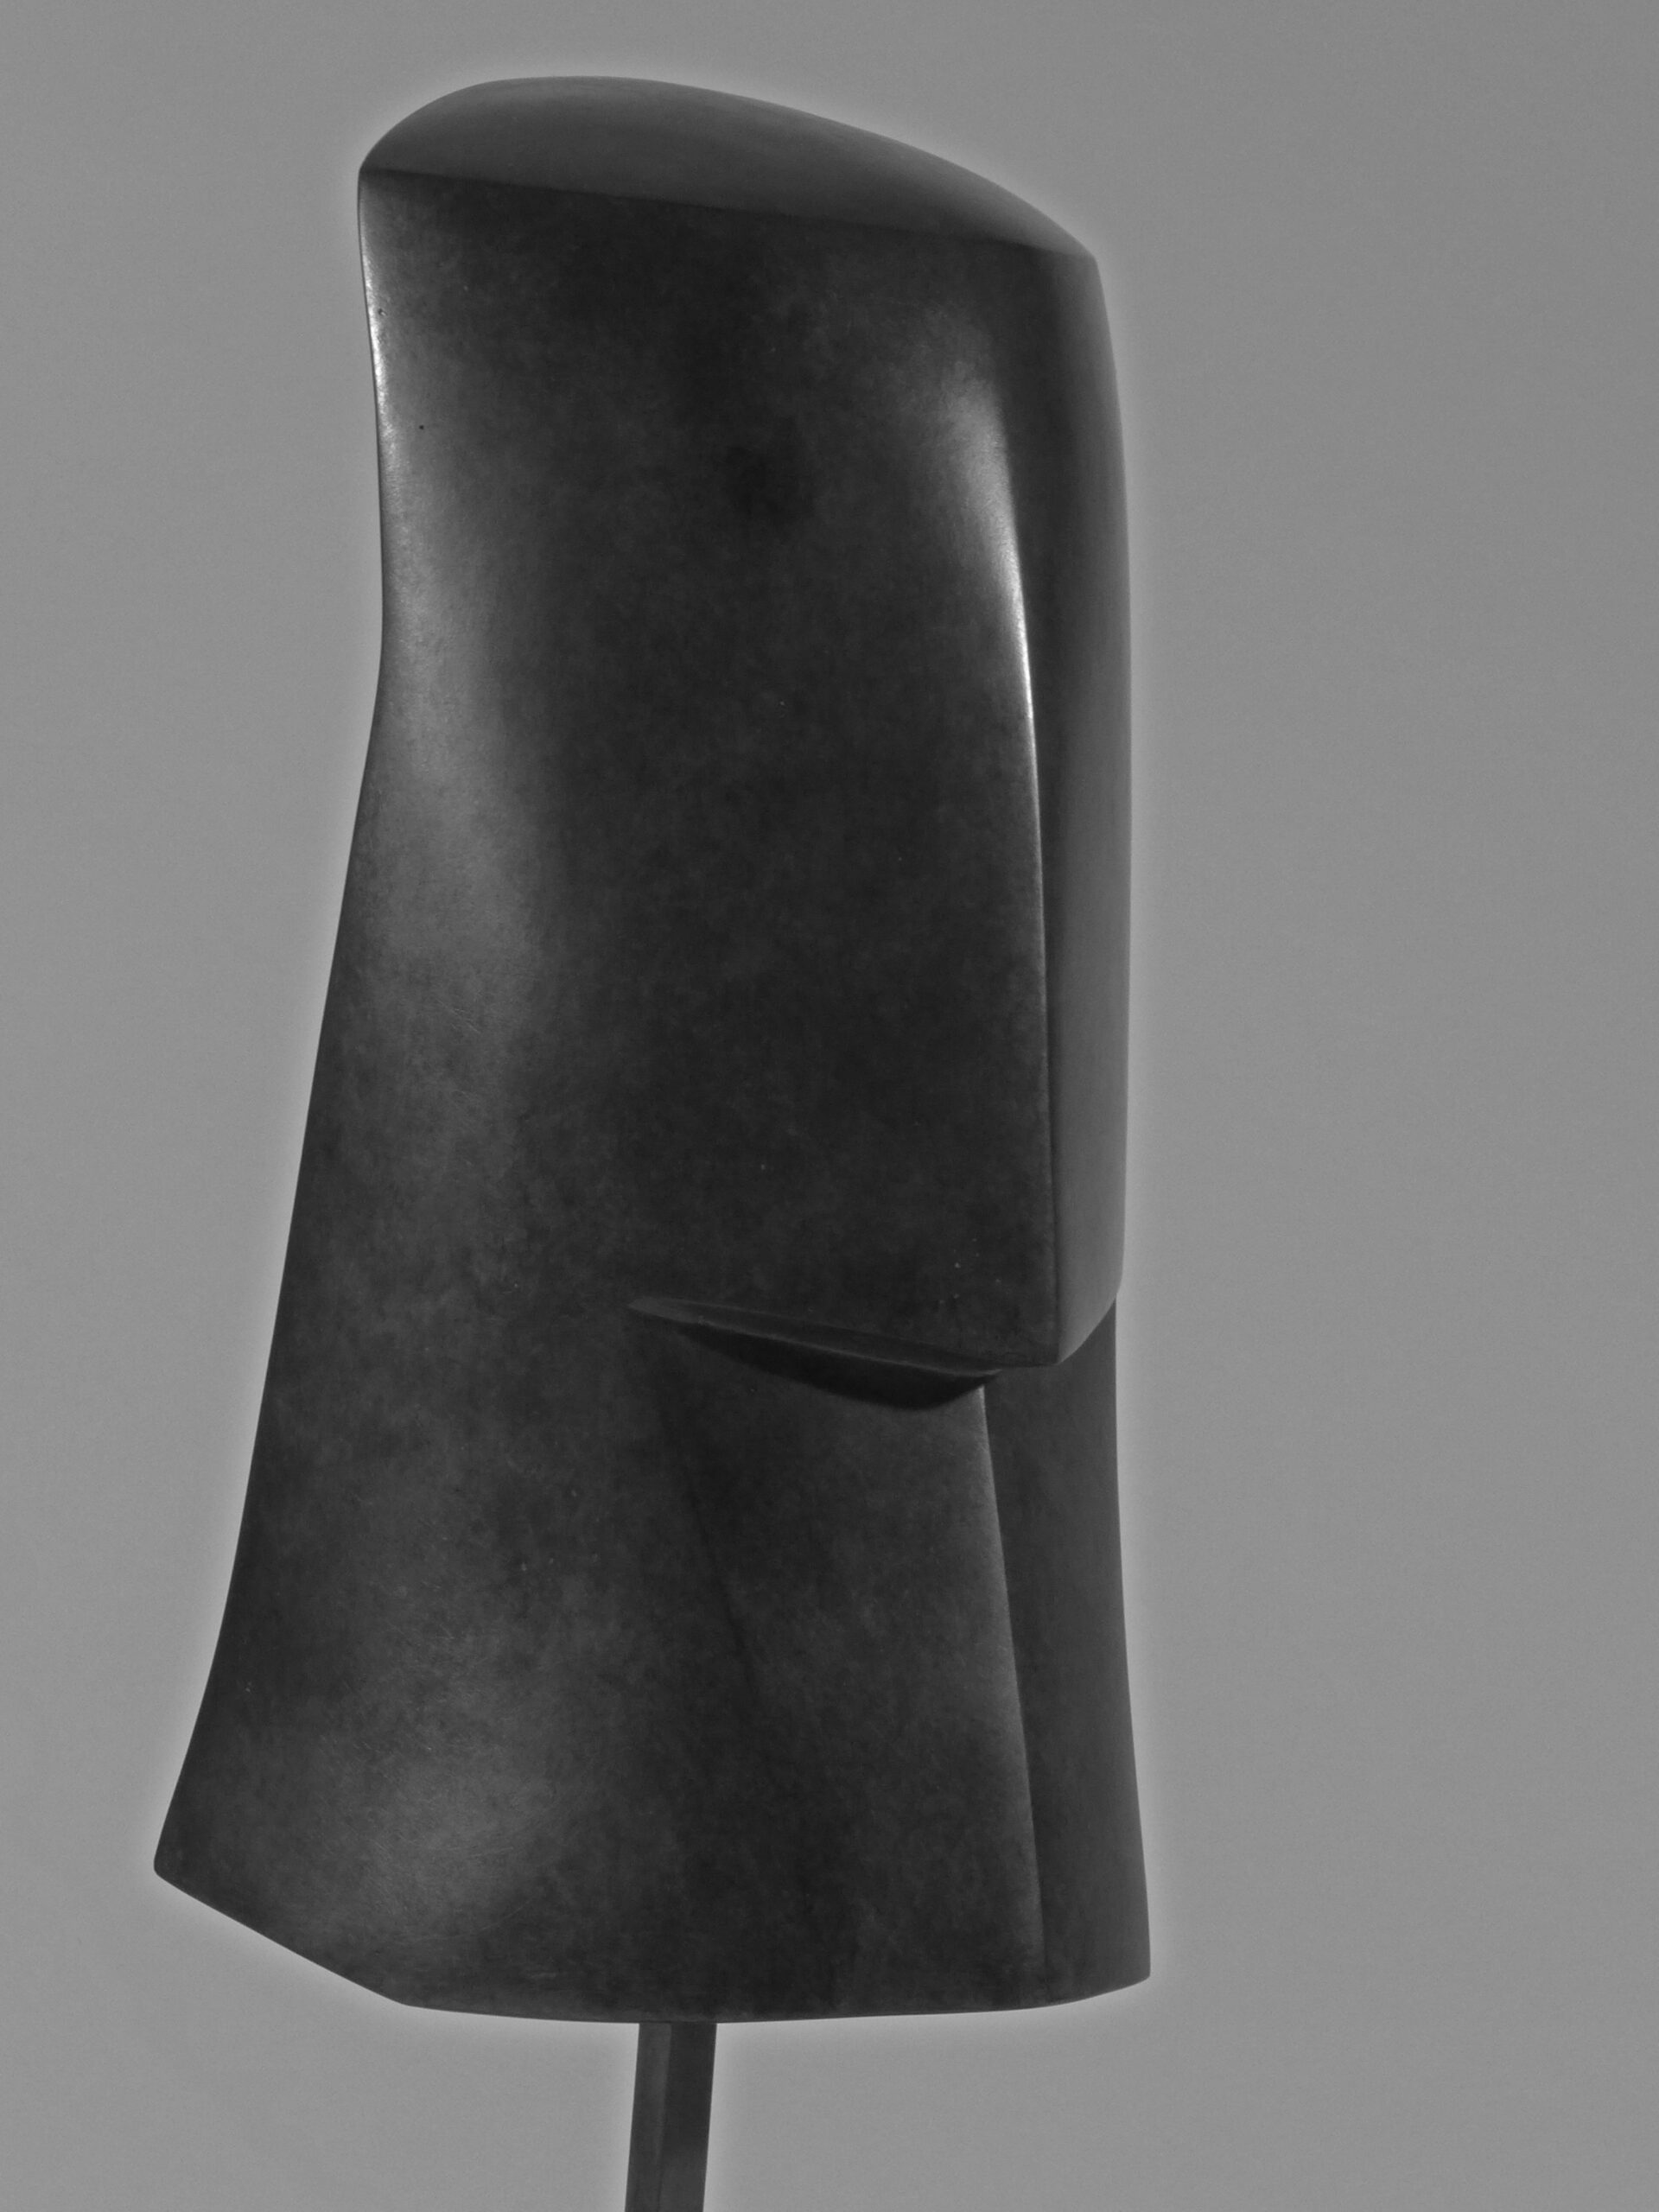 13 La Paresse, 1986, bronze, h 66,5 cm